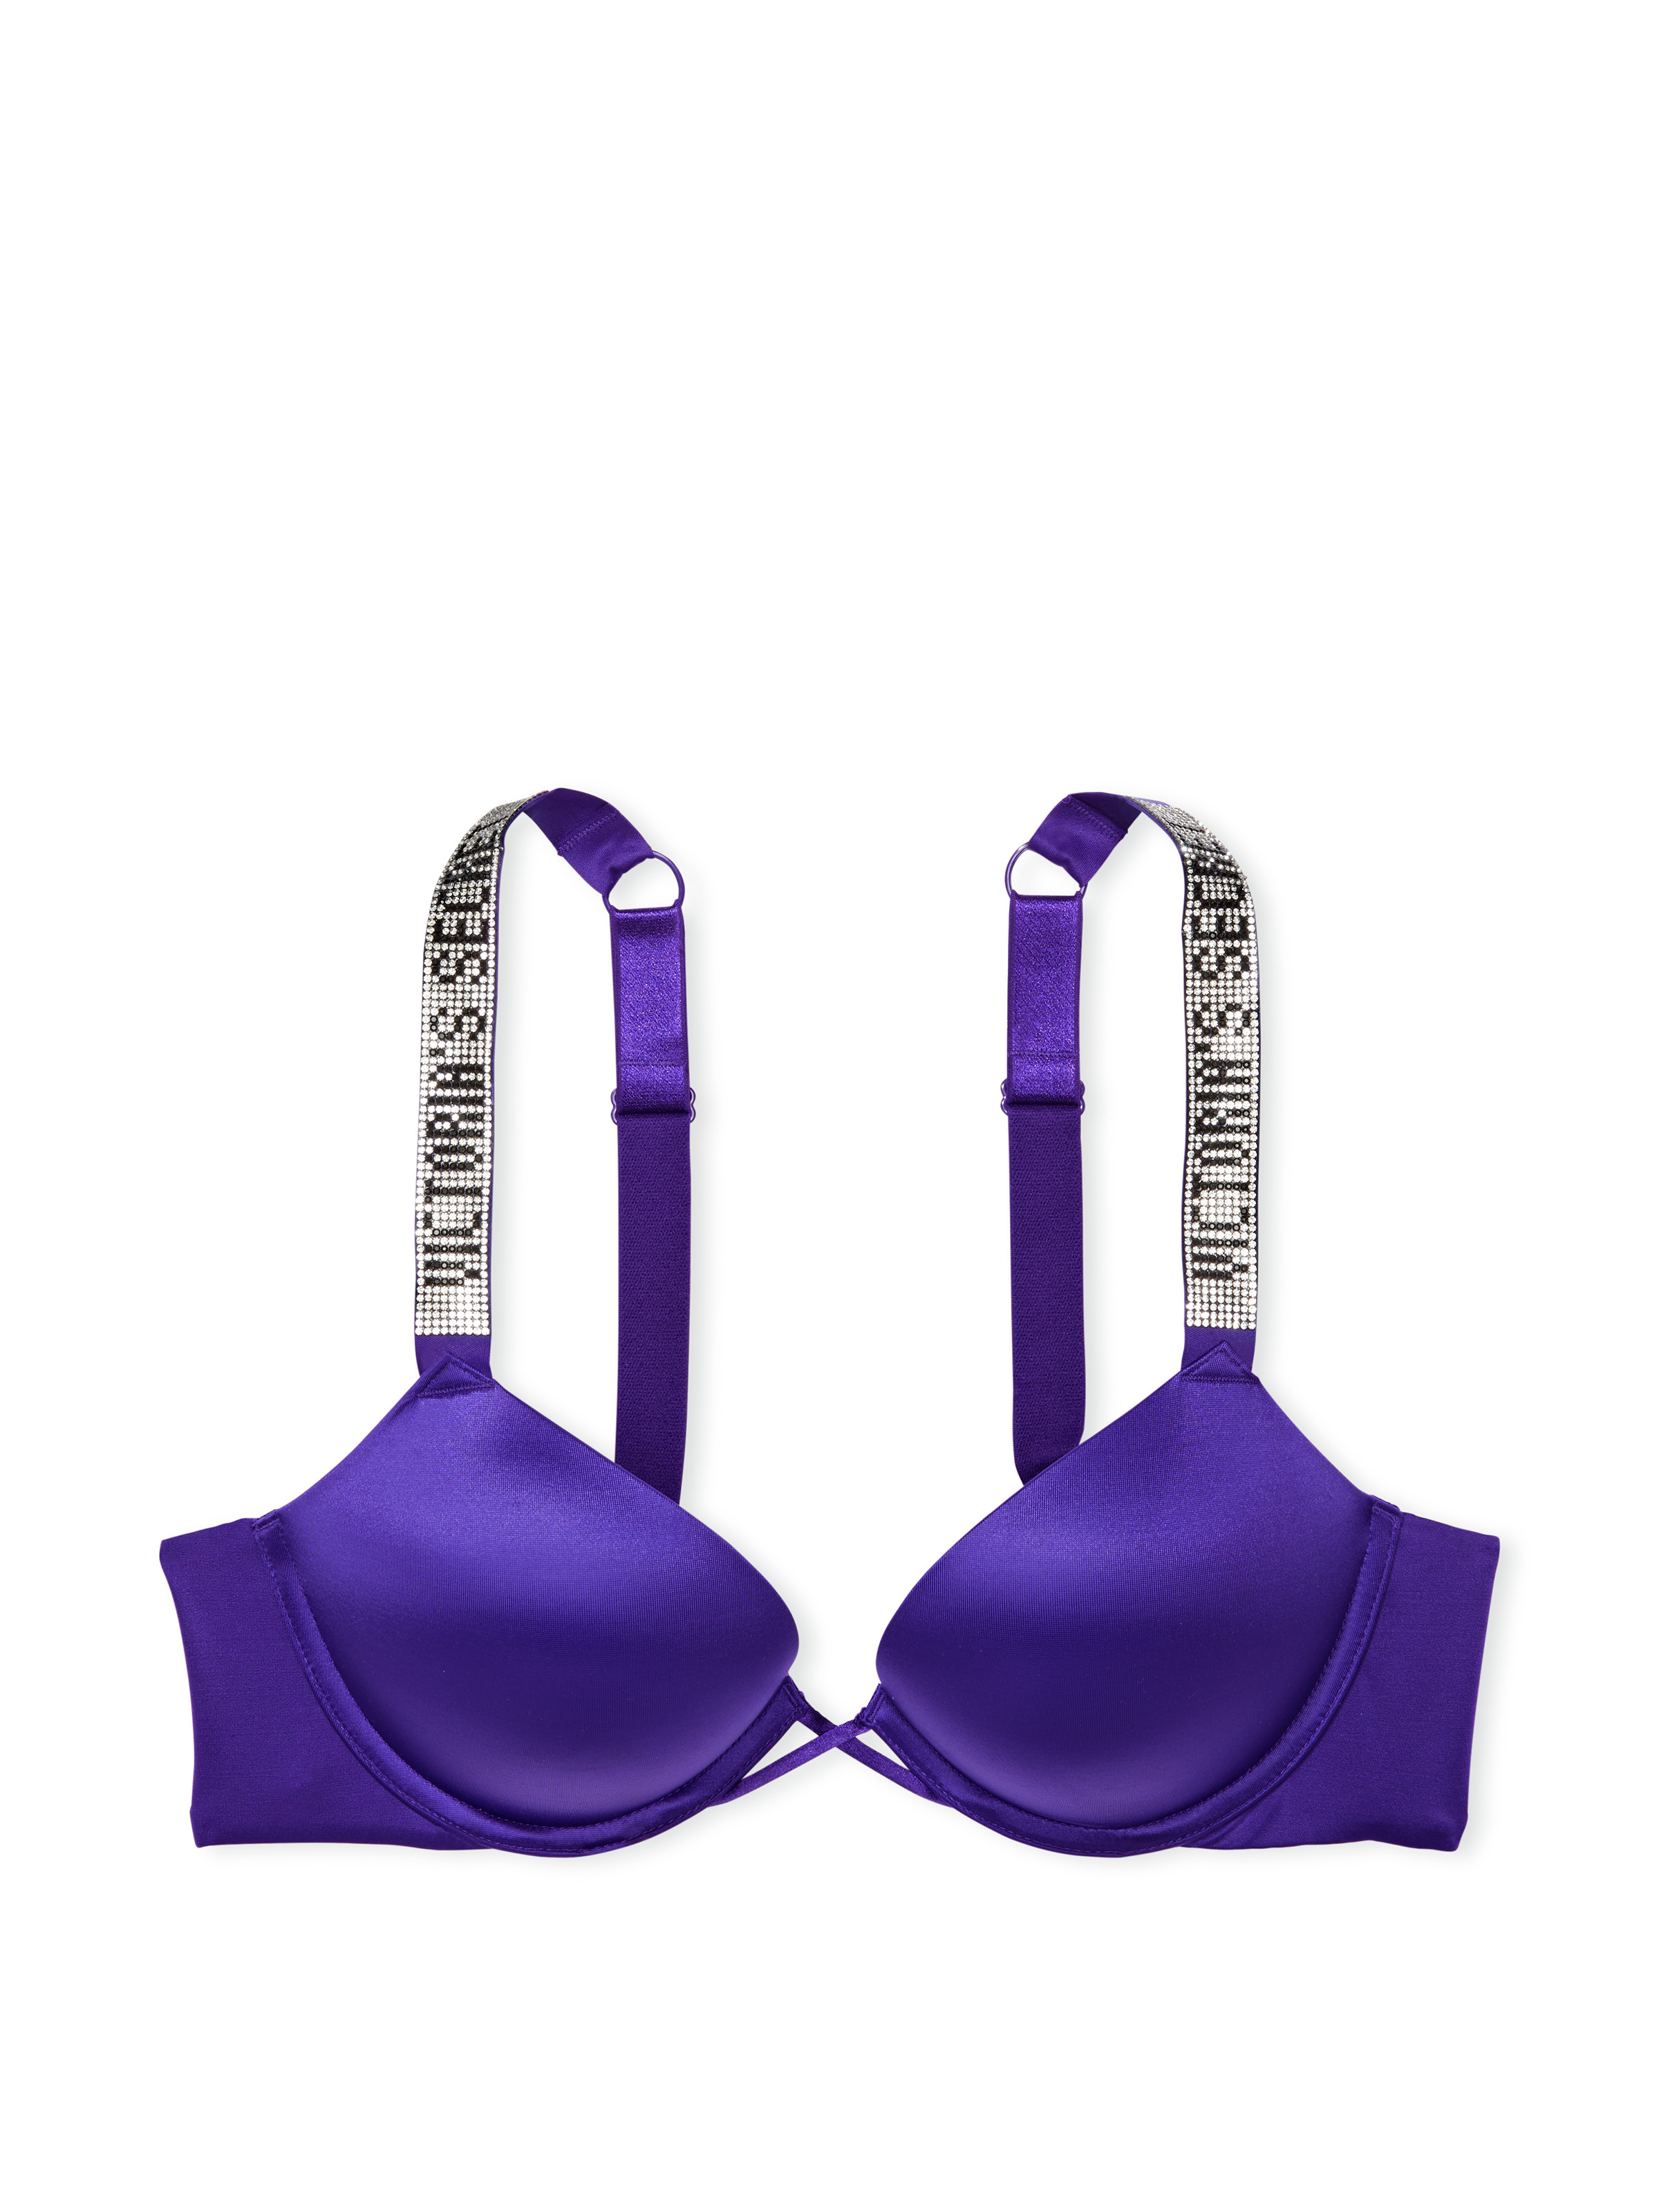 Victoria's Secret Bombshell Push Up Bra 4 piece Set Fishnet Purple  Stockings